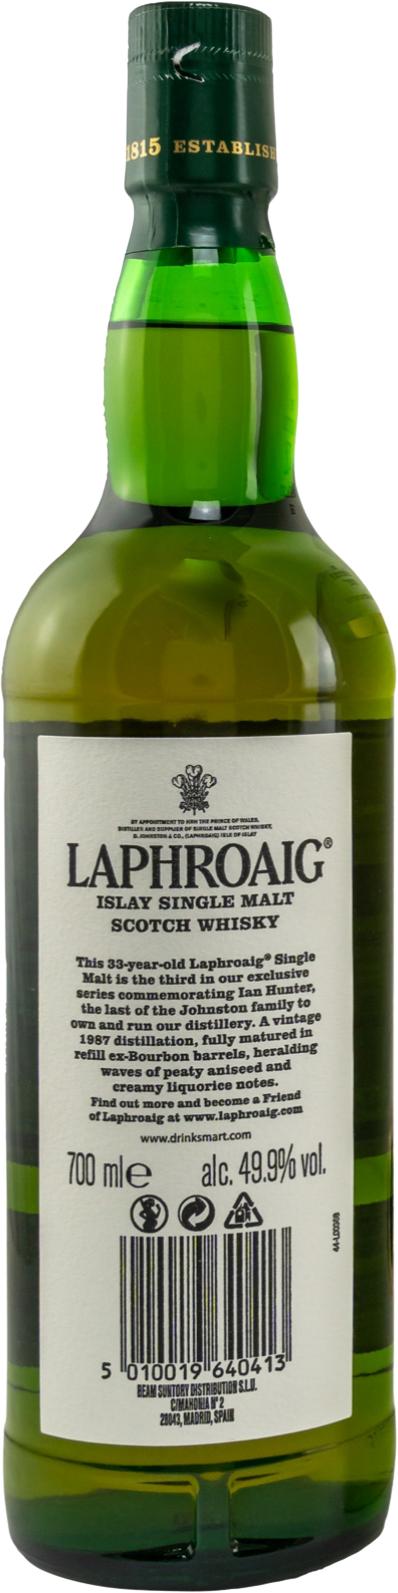 Laphroaig 33-year-old